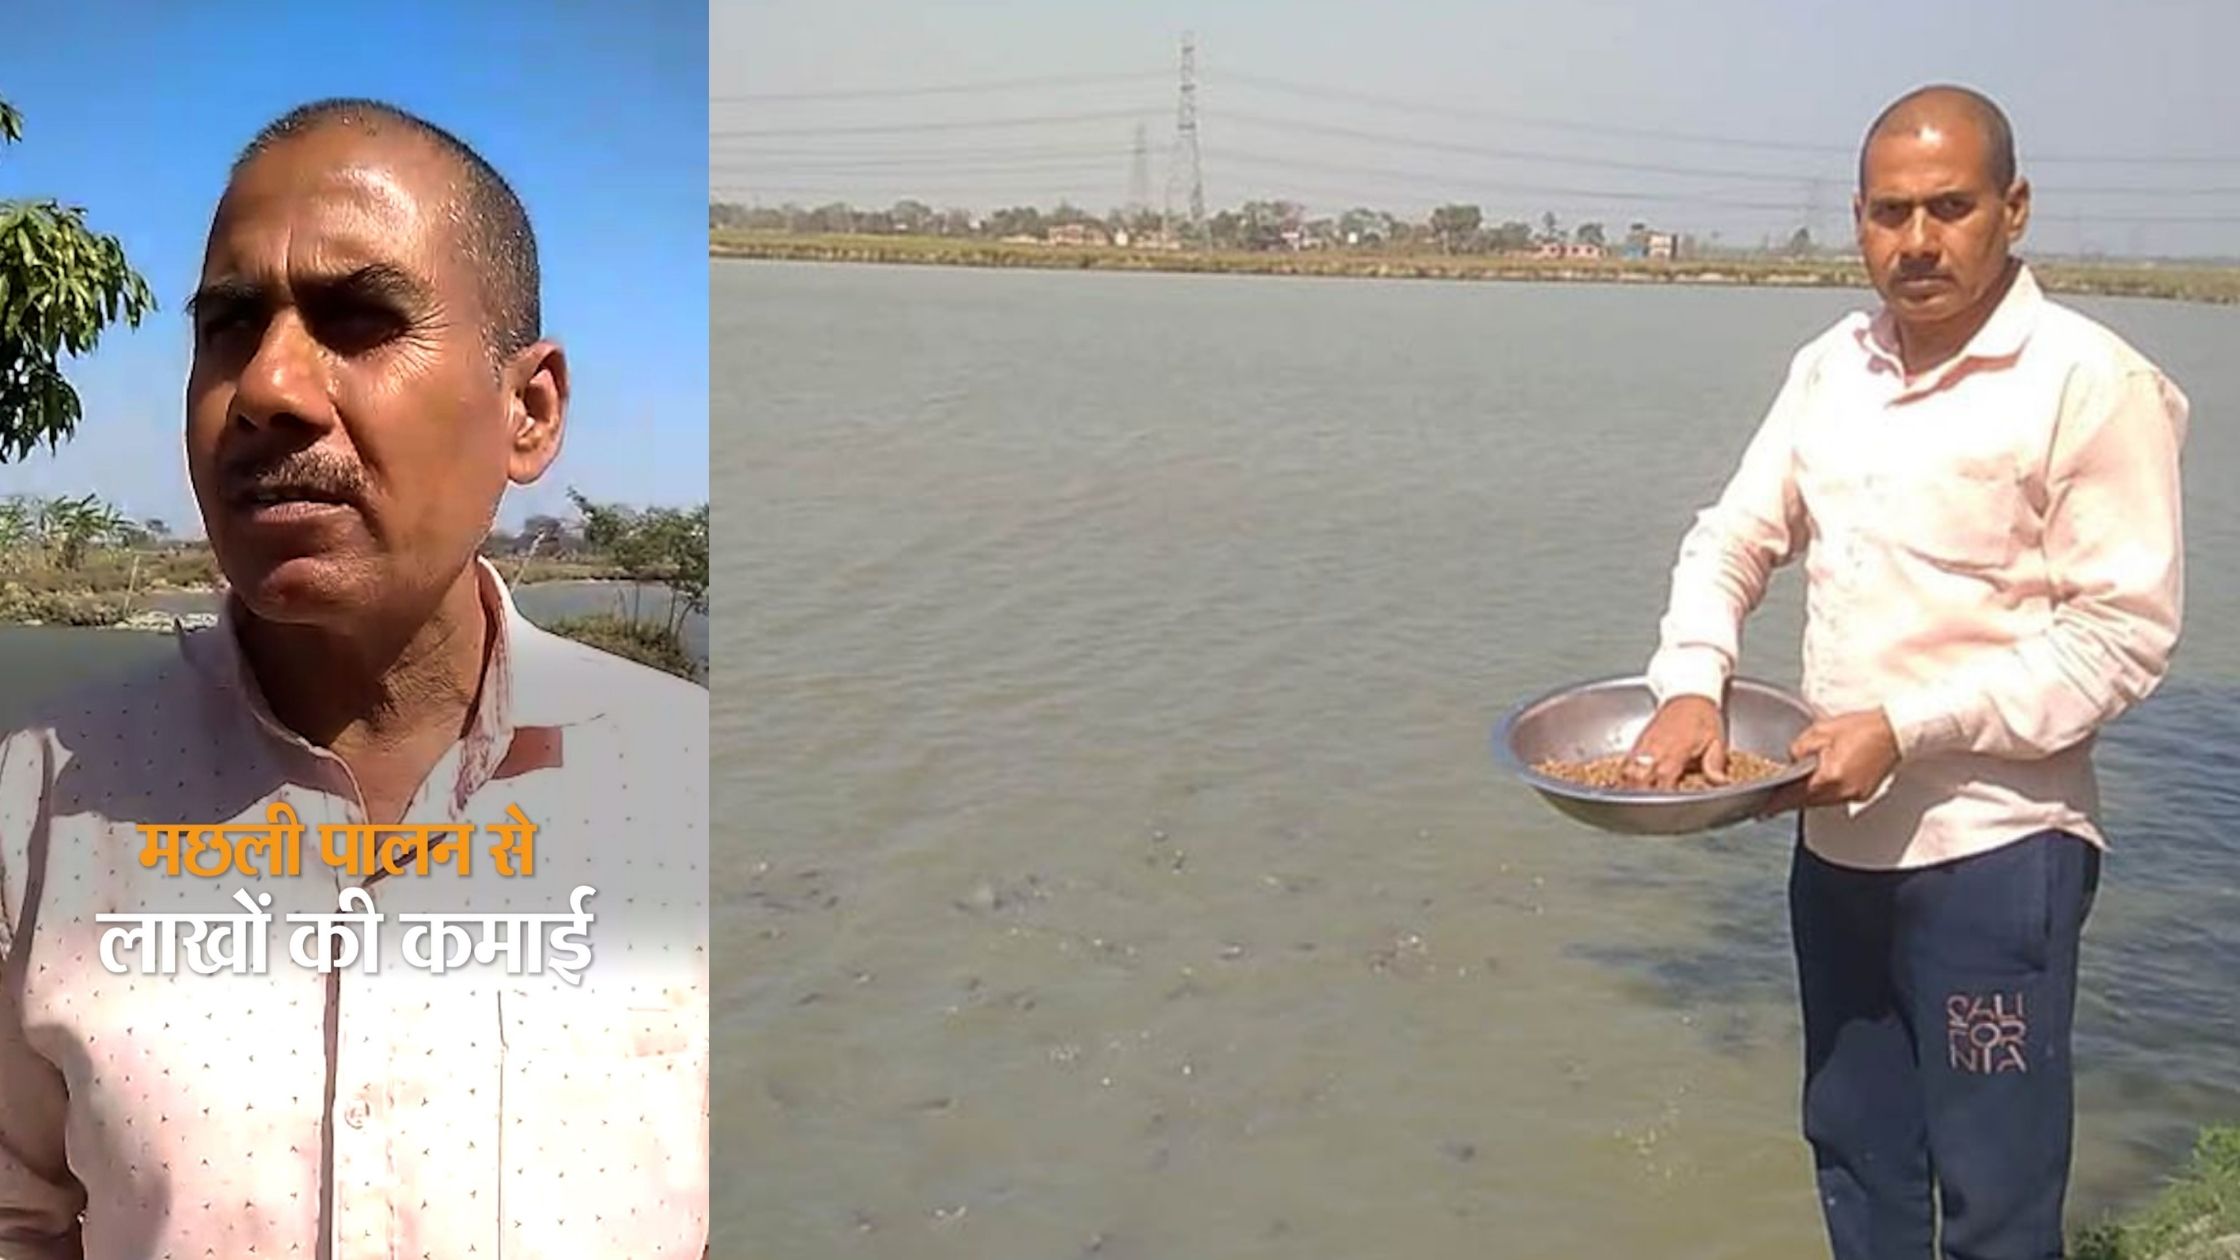 Vinod of Bihar earning 15 lakhs annually from fish farming